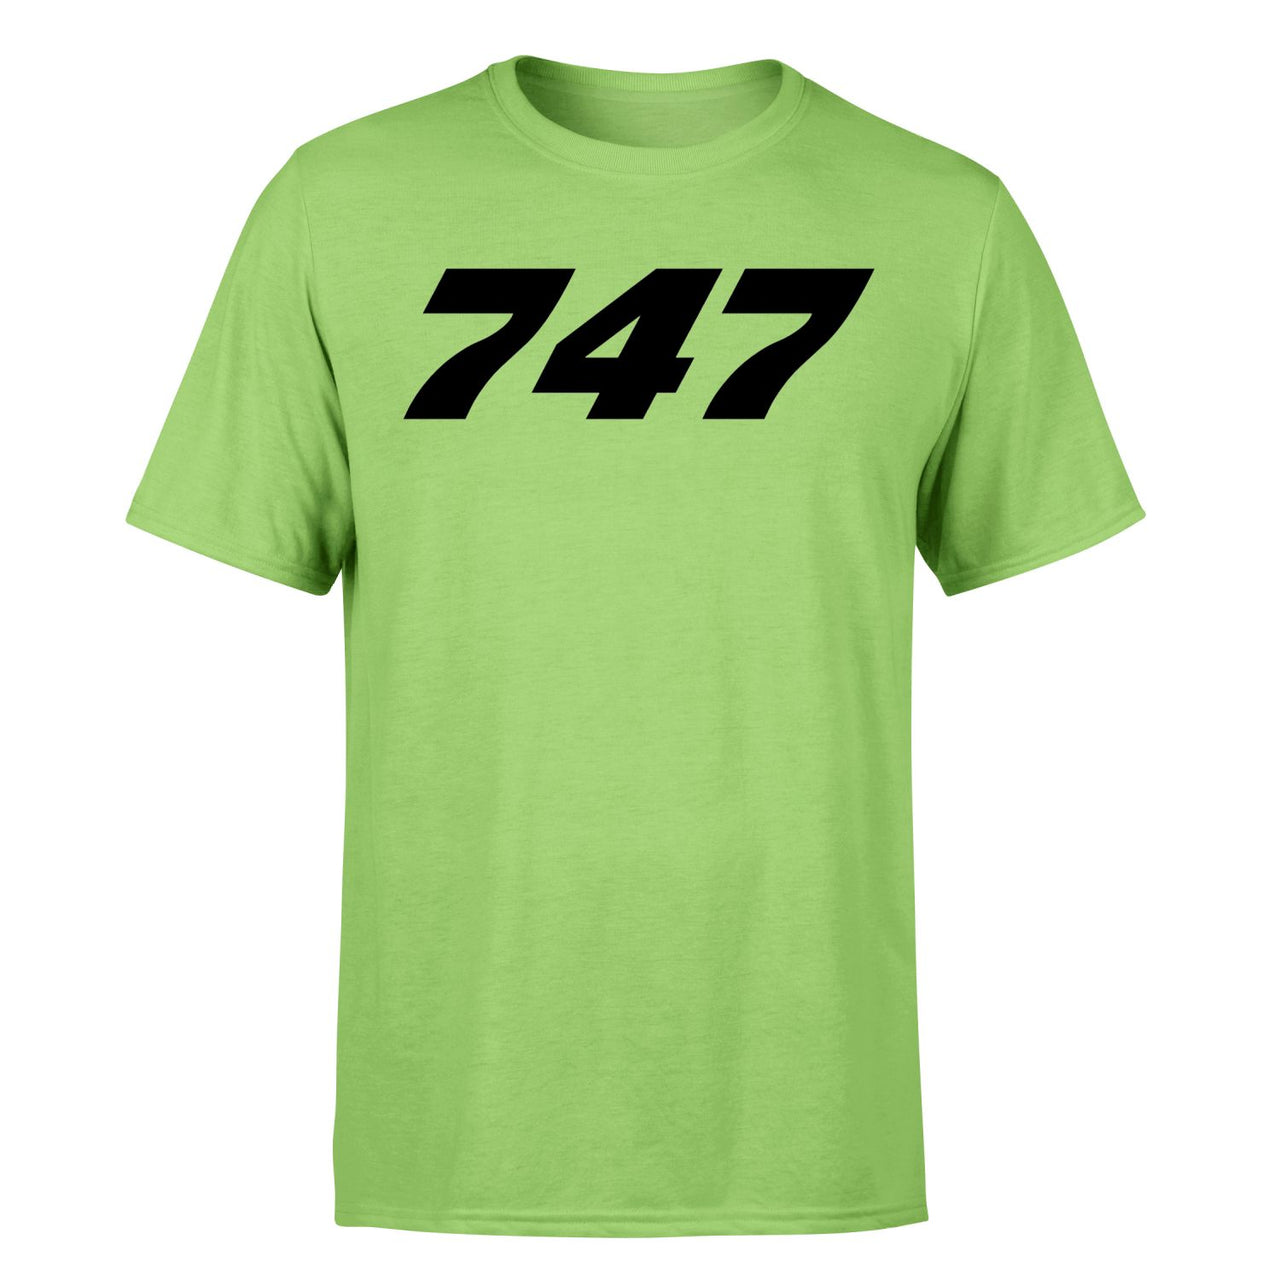 747 Flat Text Designed T-Shirts